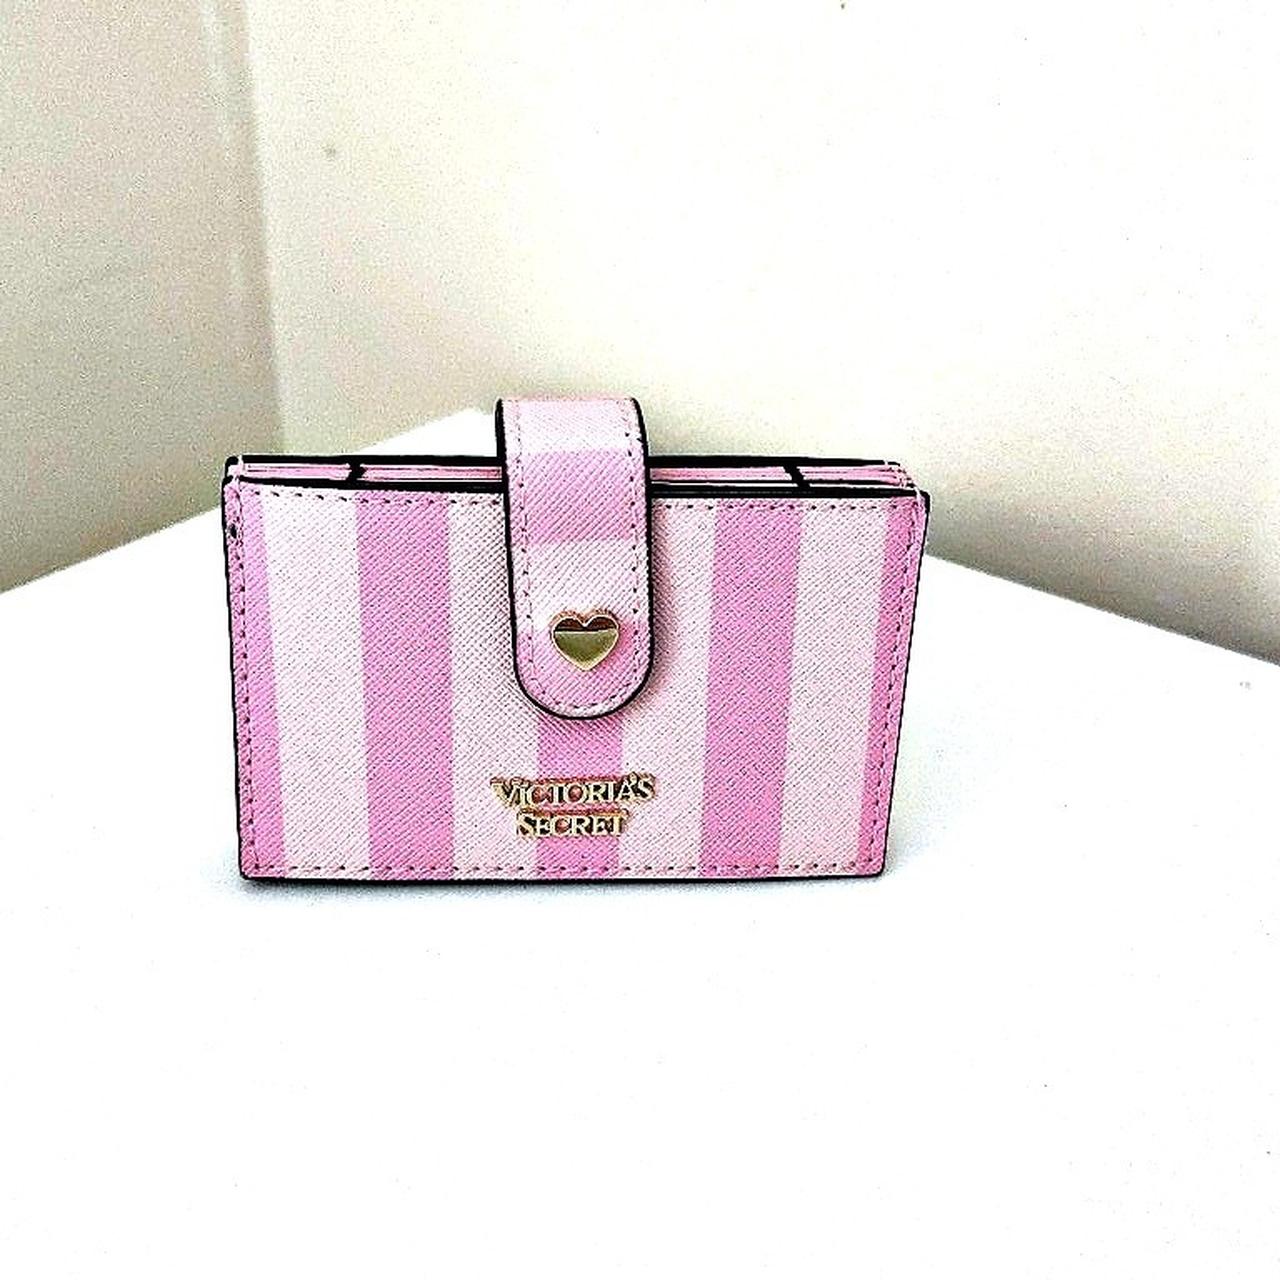 Victoria's Secret Women's Pink and Gold Bag